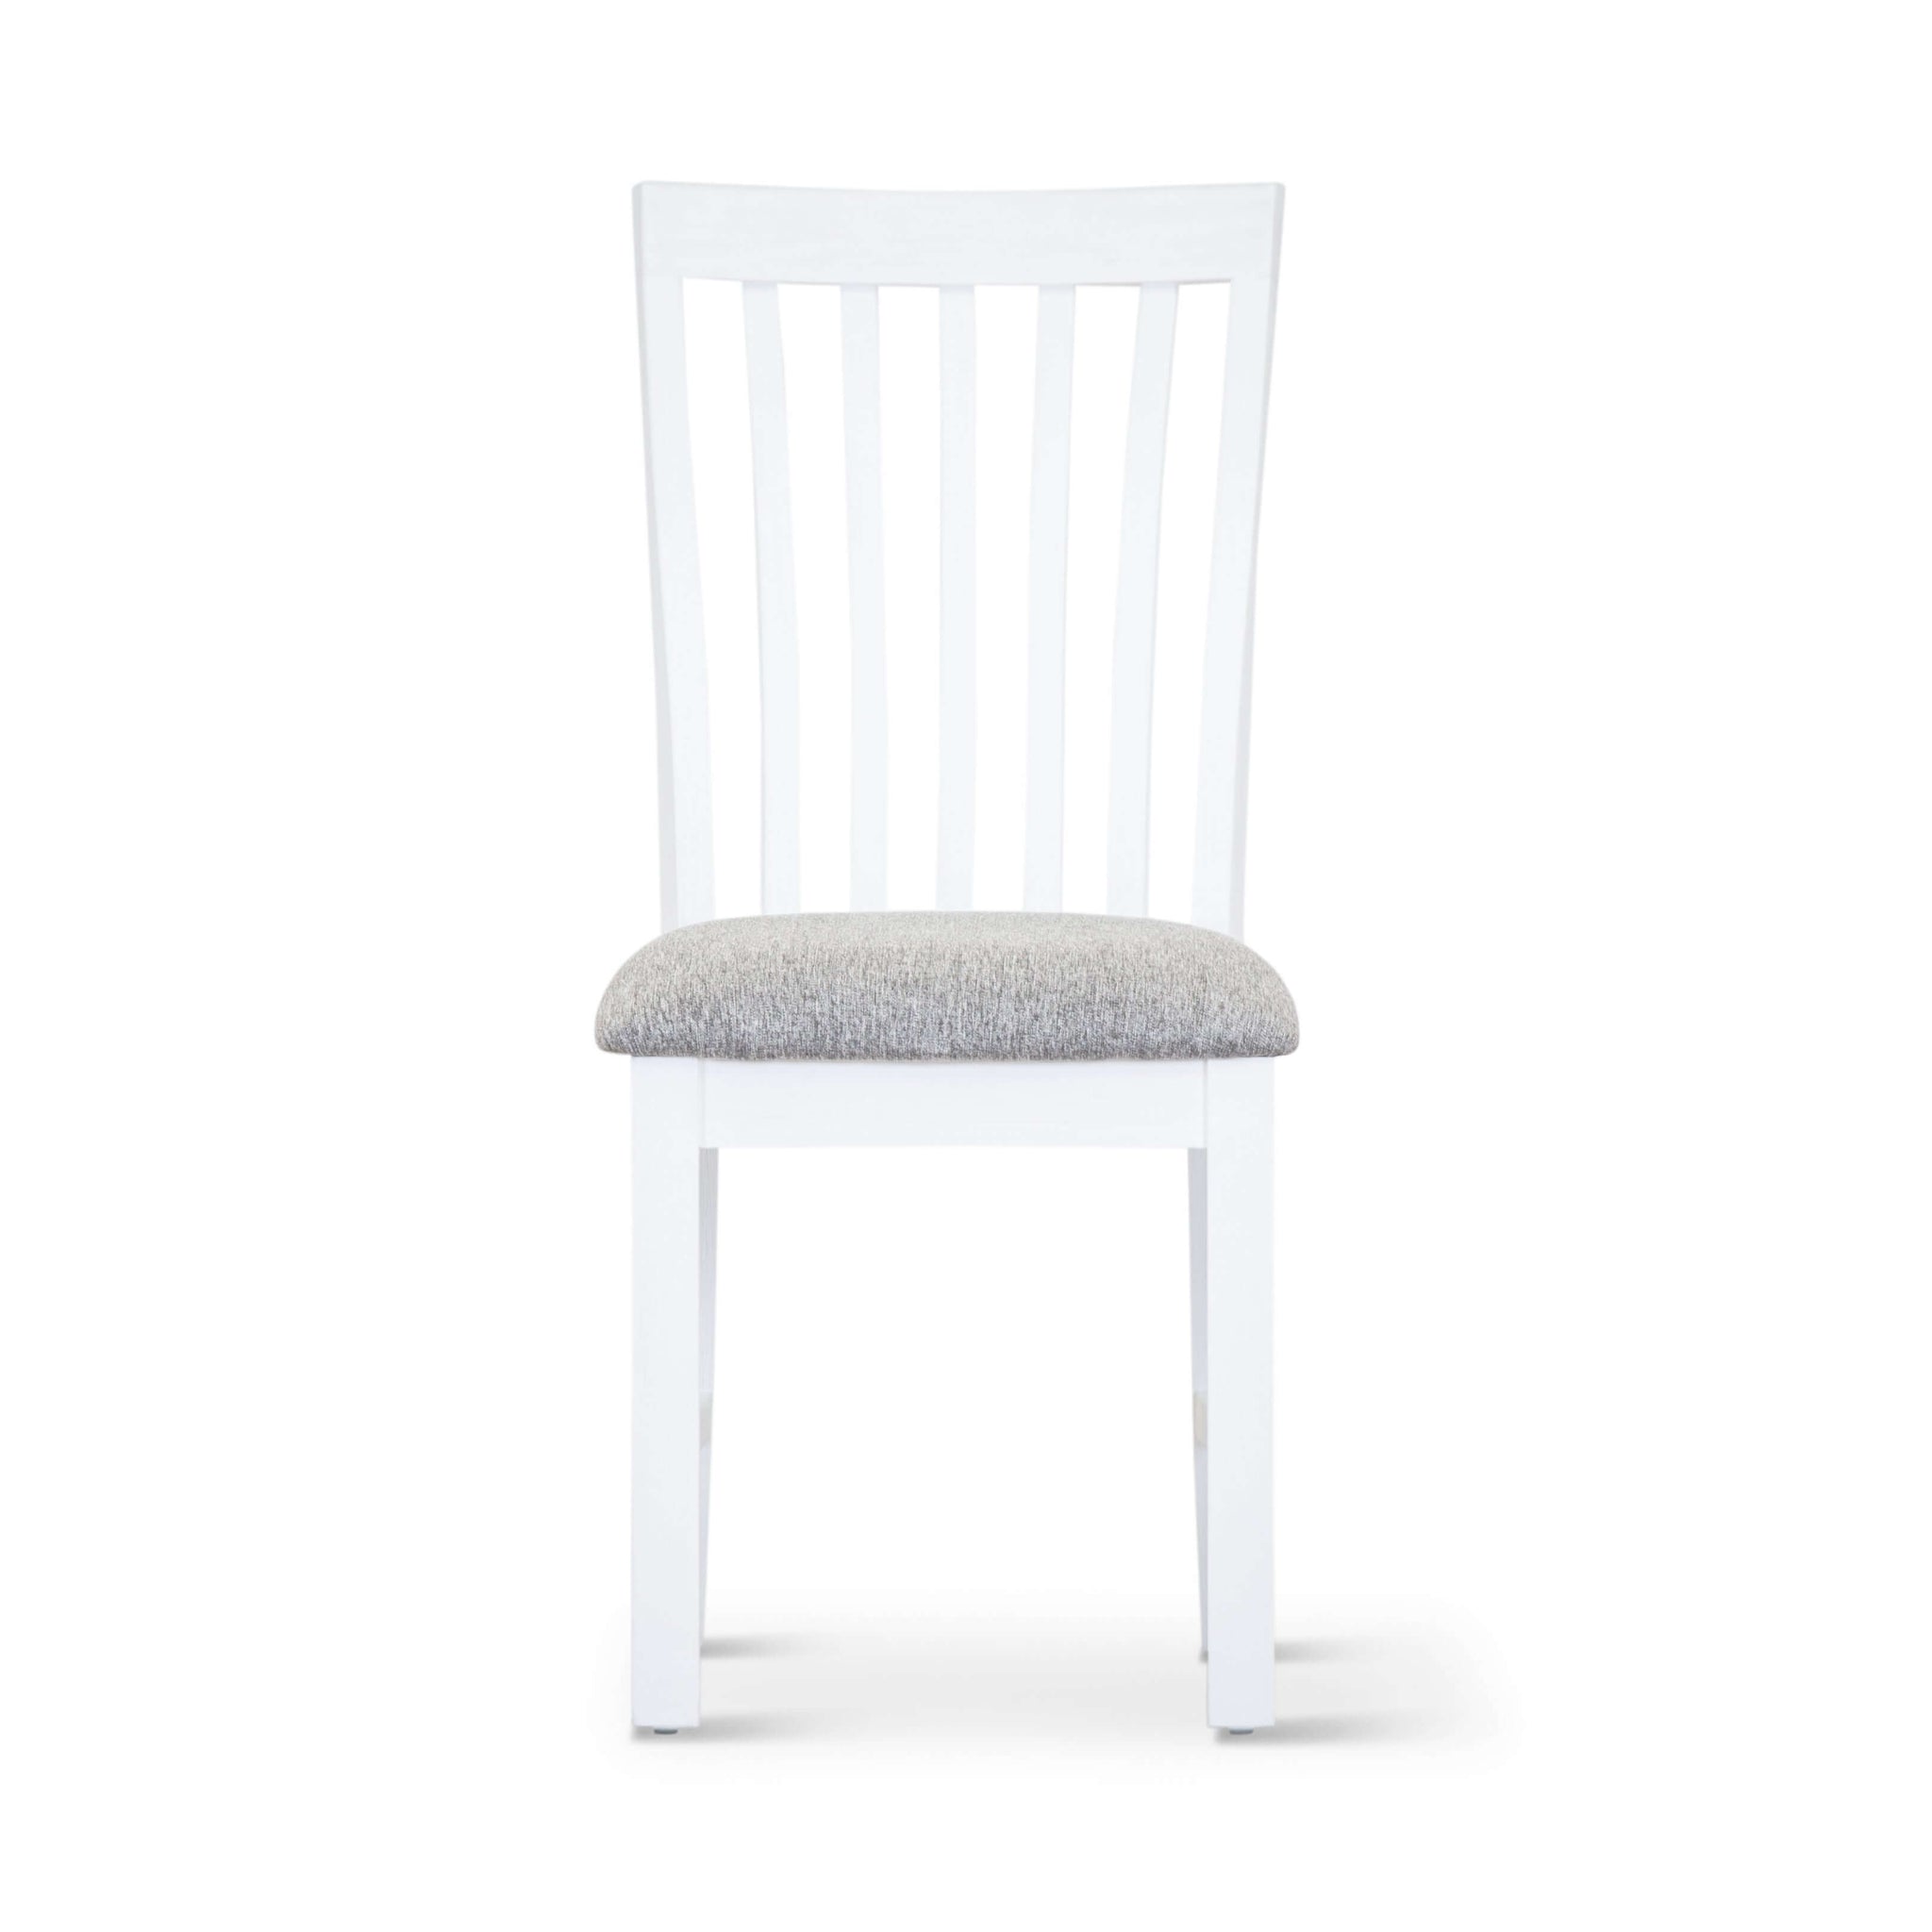 Laelia Dining Chair Set of 4 Solid Acacia Timber Wood Coastal Furniture - White-Upinteriors